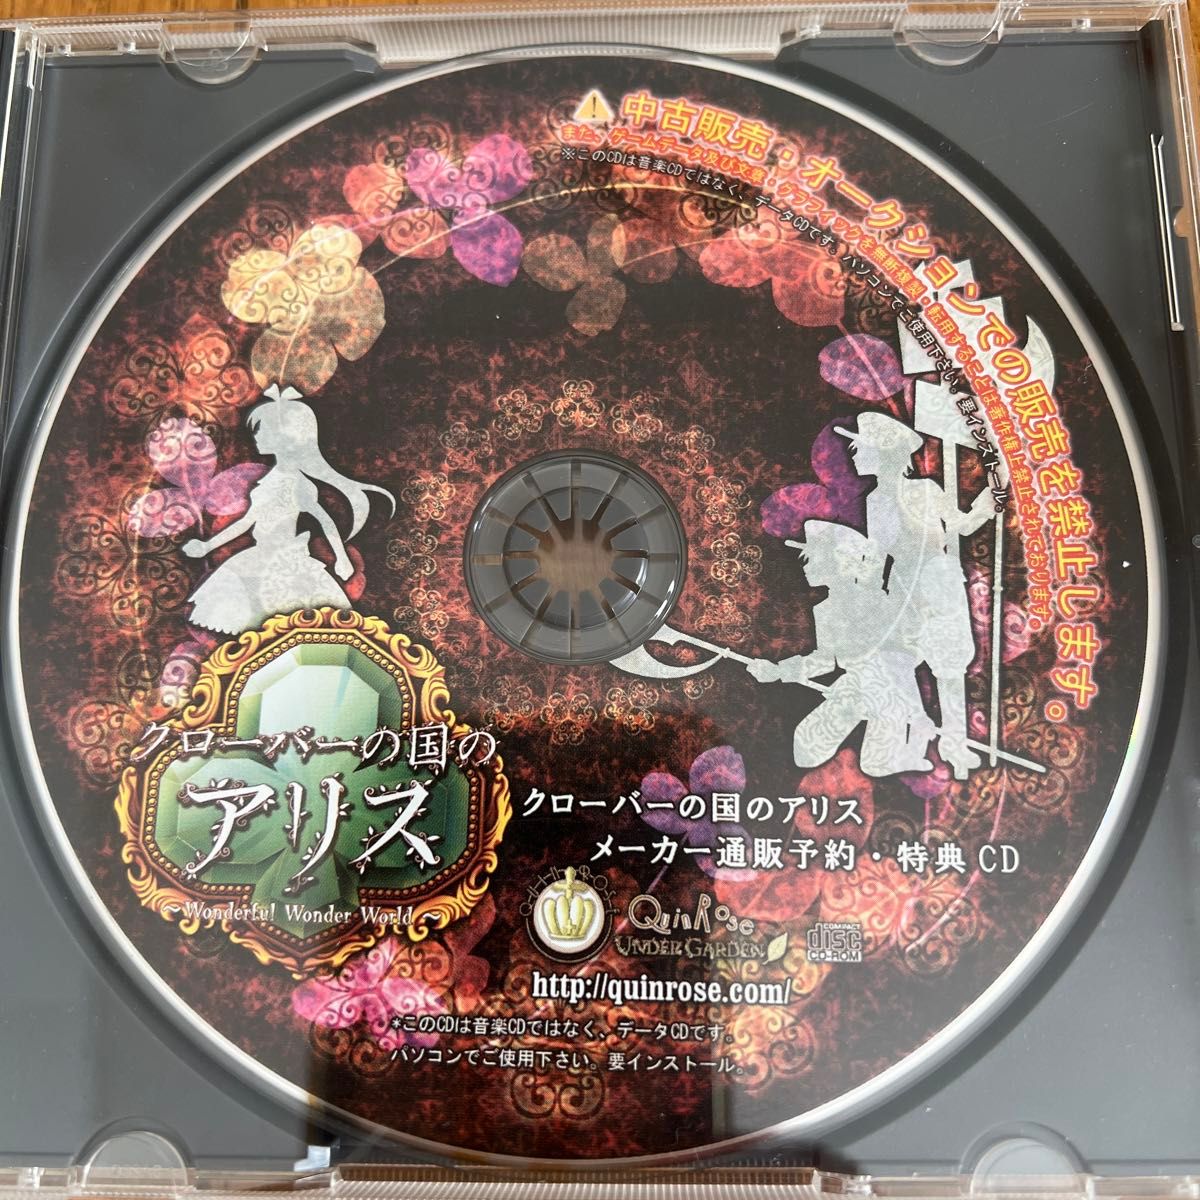 【PC版】クローバーの国のアリス ~Wonderful Wonder World~ 特典CD-ROM2点付き